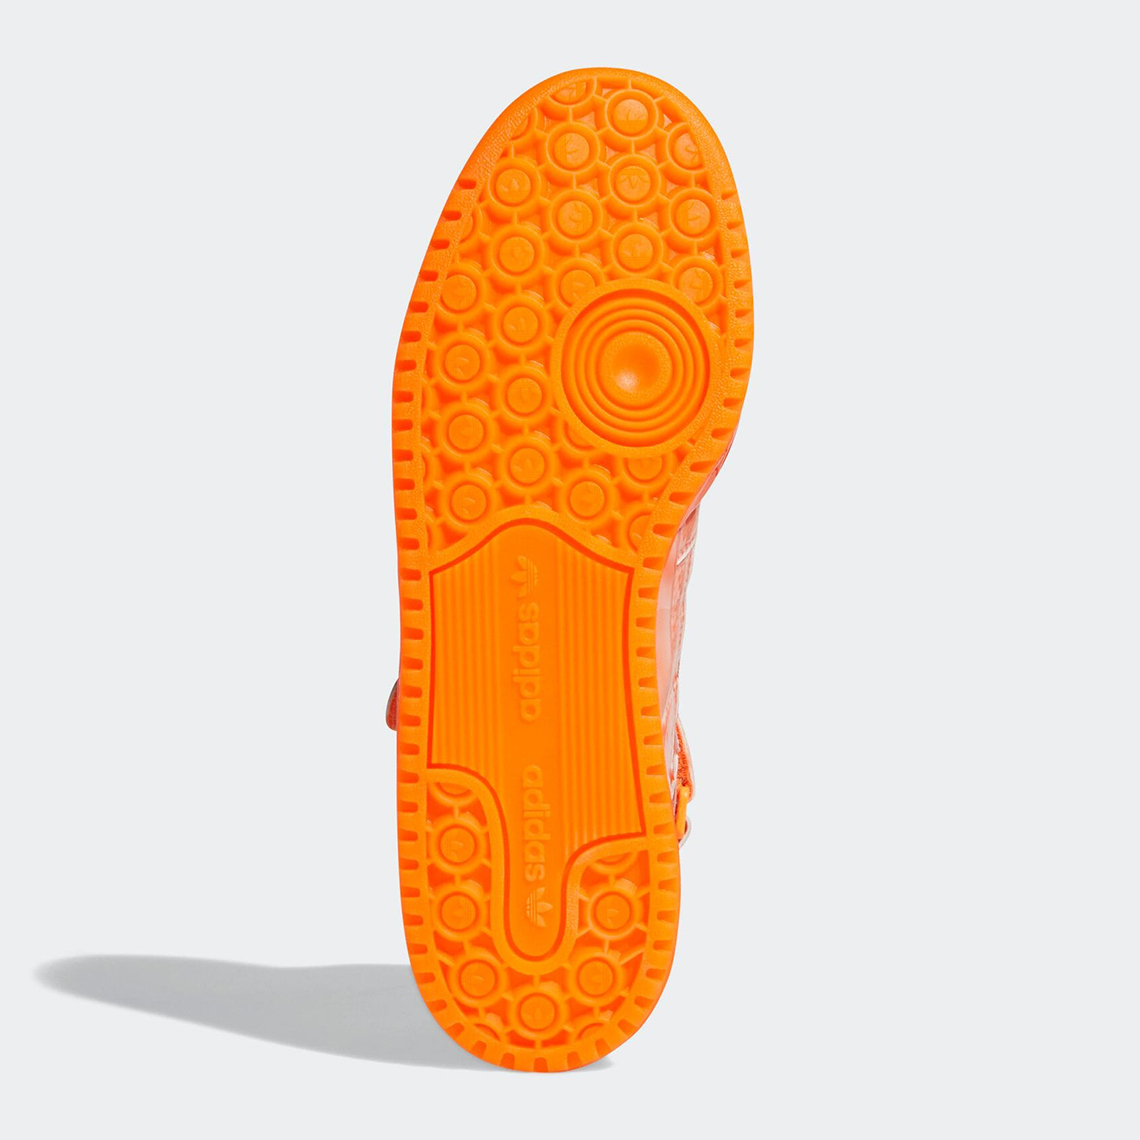 Jeremy Scott Adidas Forum Hi Dipped Orange Q46124 3